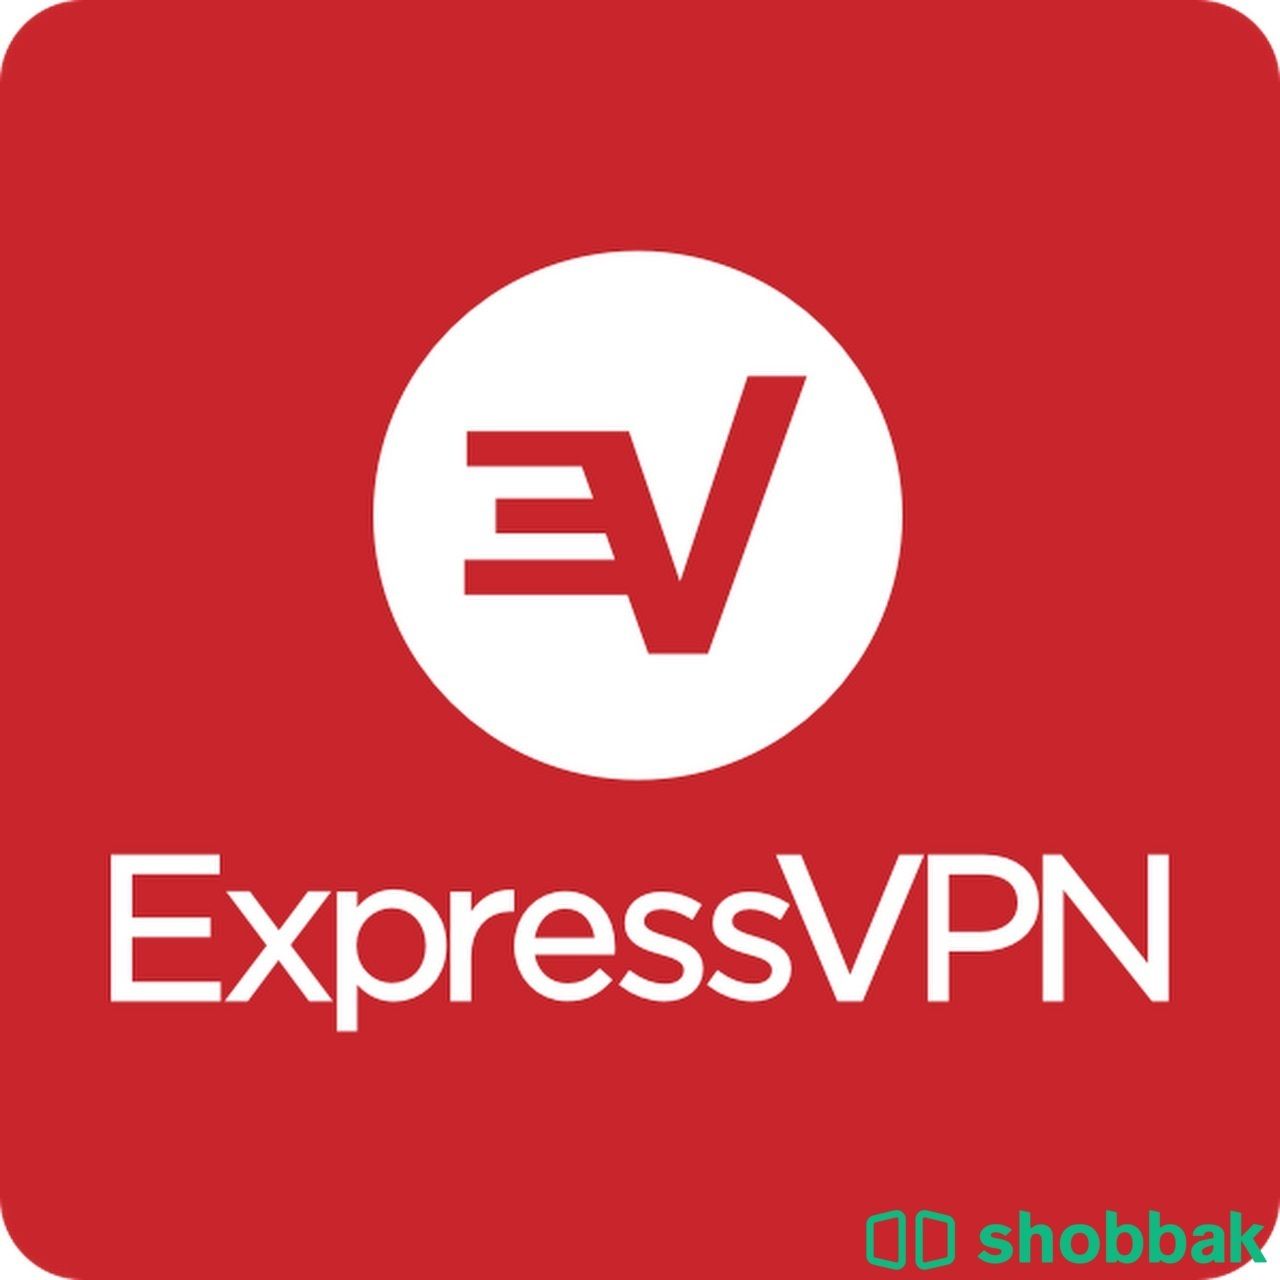 حساب 9 شهور VPN EXPRESS Shobbak Saudi Arabia